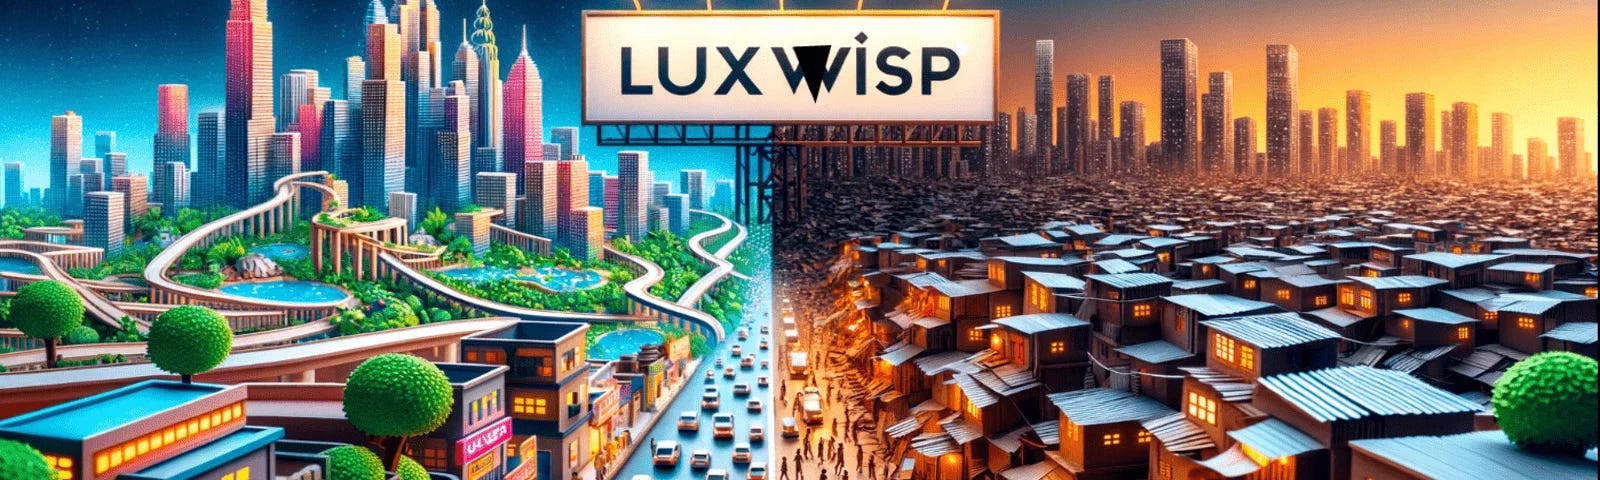 Luxwisp Urbanization